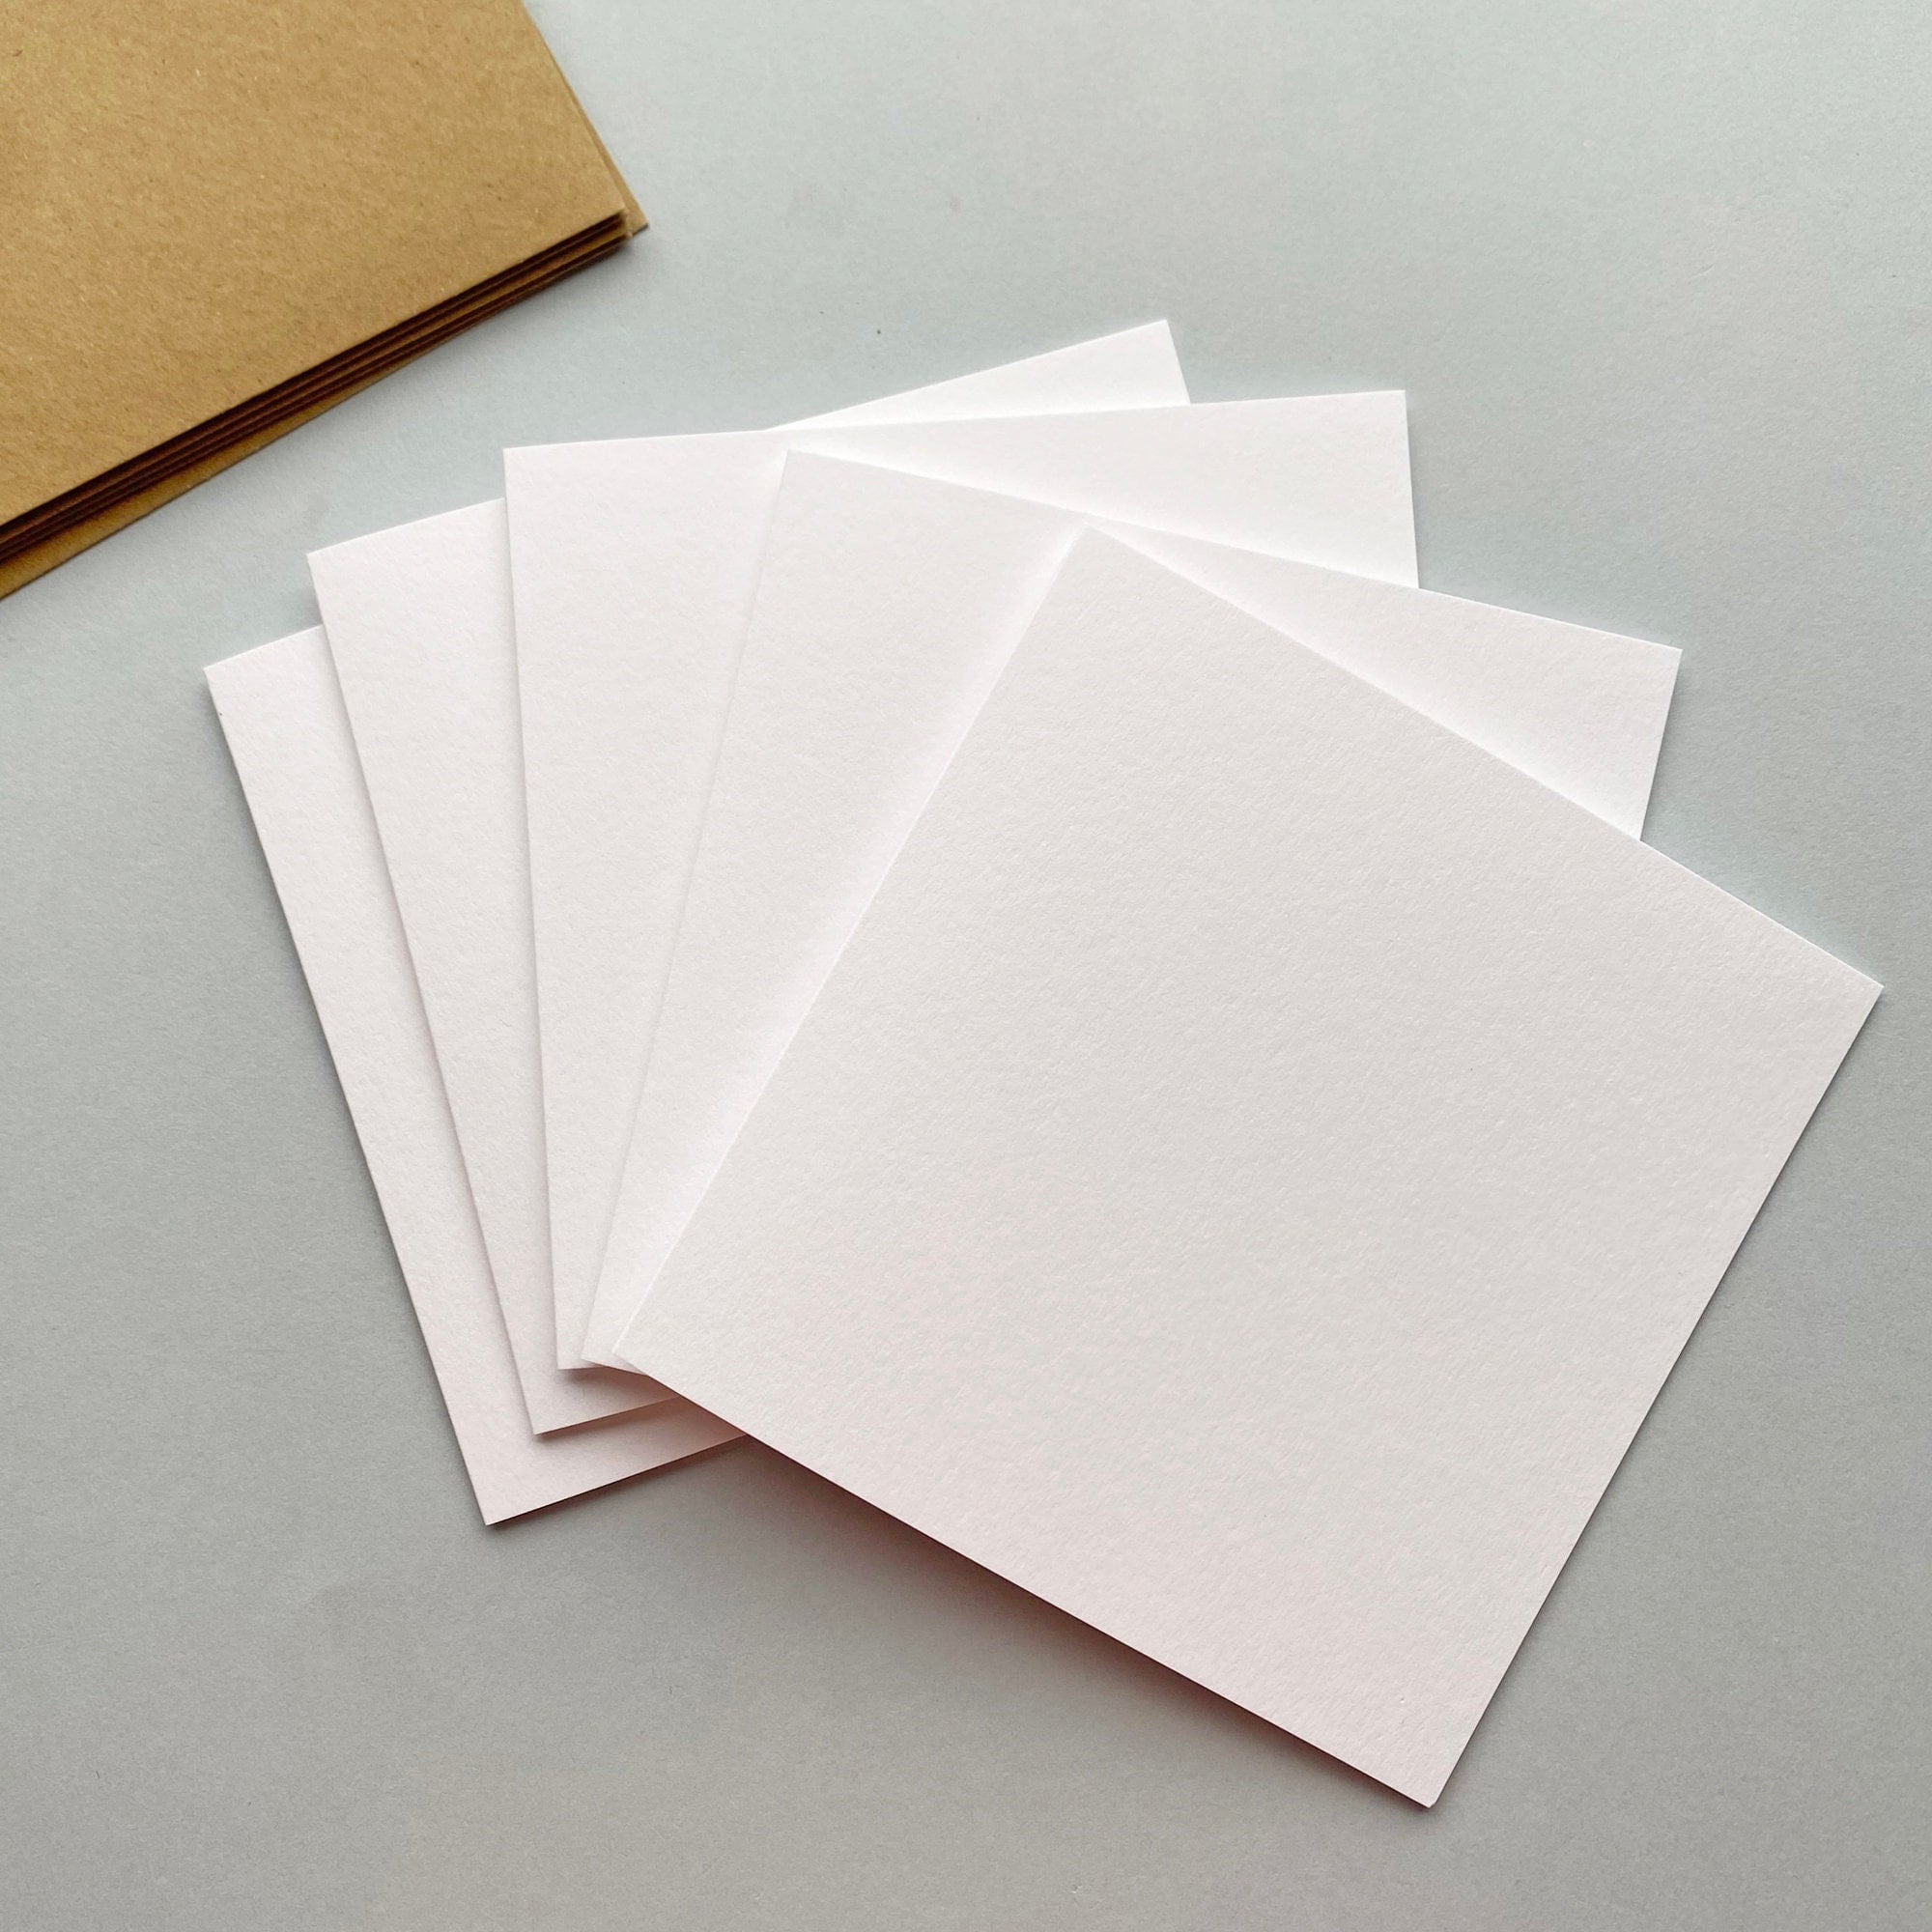 Creative Envelope Maker Board 6.4*8.5 inch Multi-Purpose Scoring